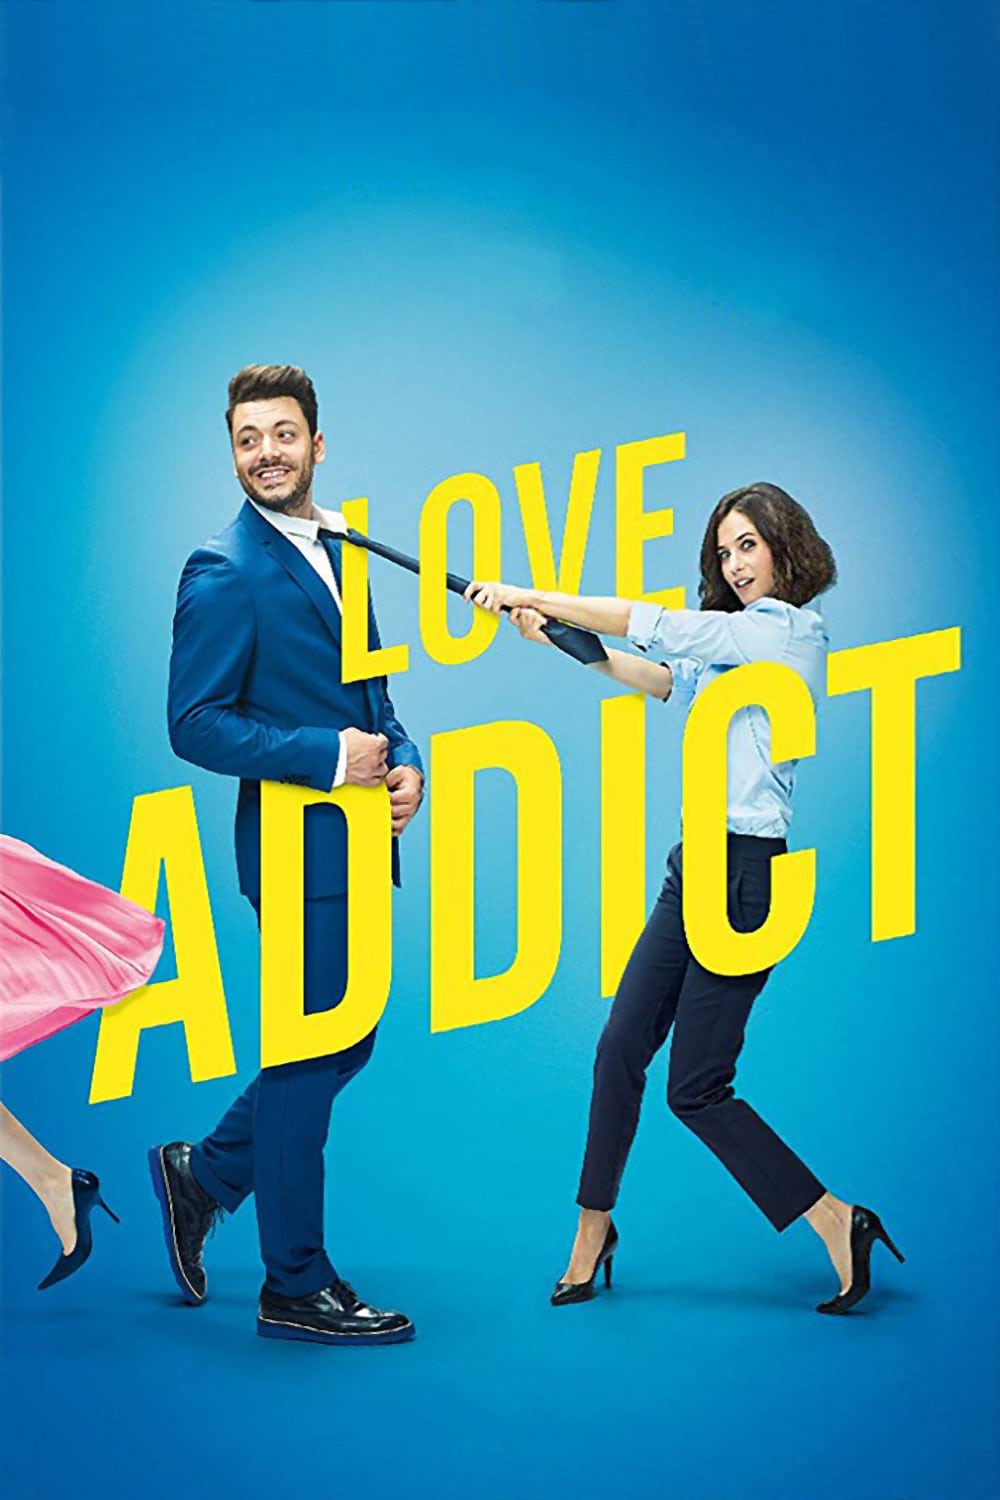 Affiche du film "Love Addict"